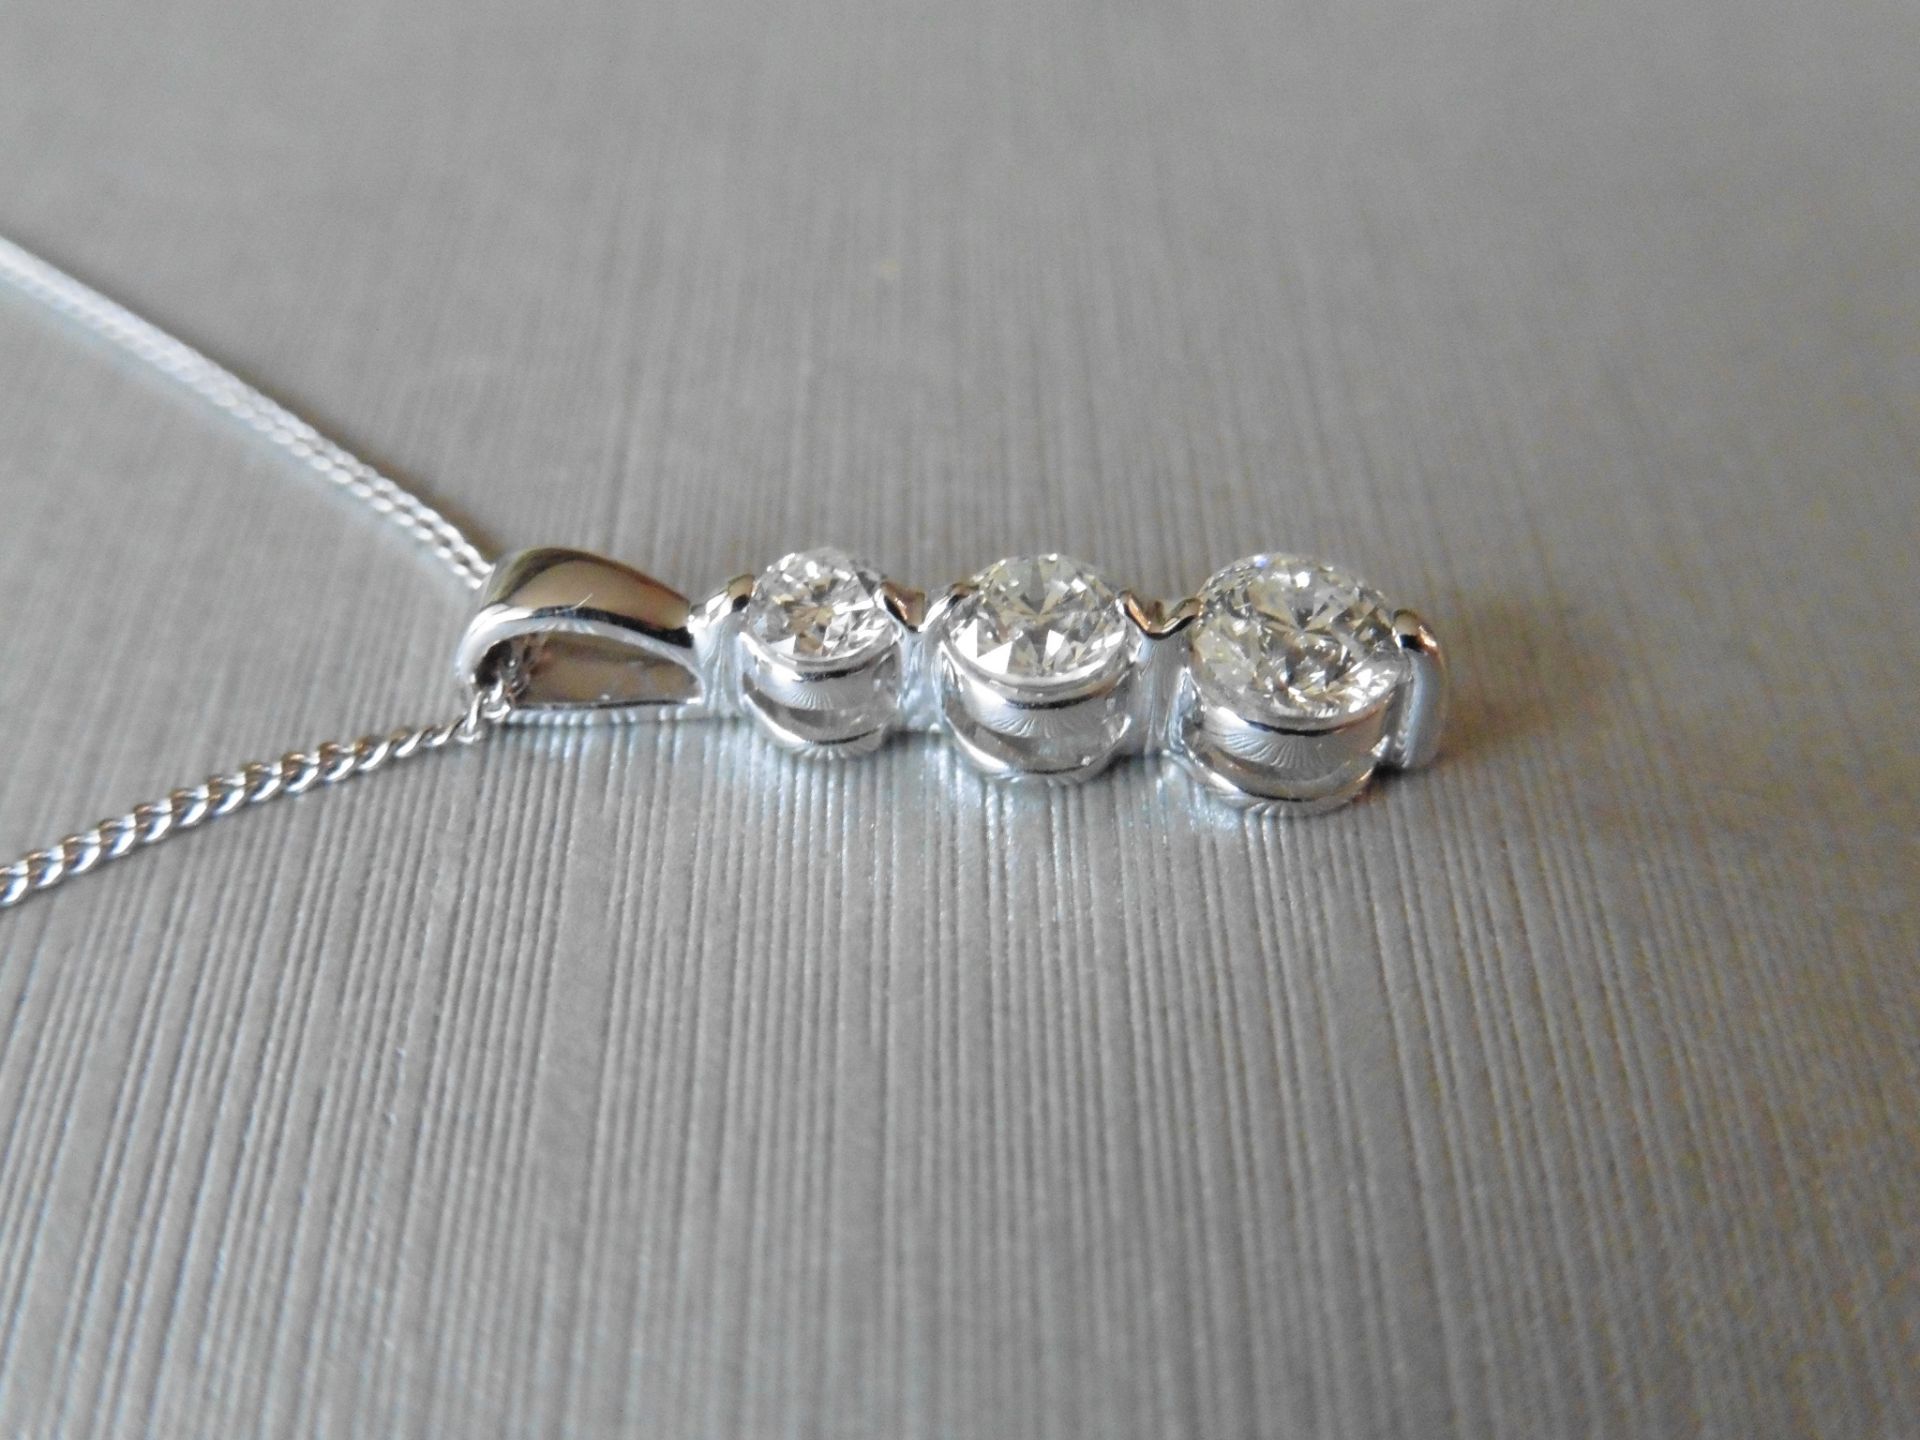 0.75ct Trilogy style pendant set with 3 graduated brilliant cut diamonds